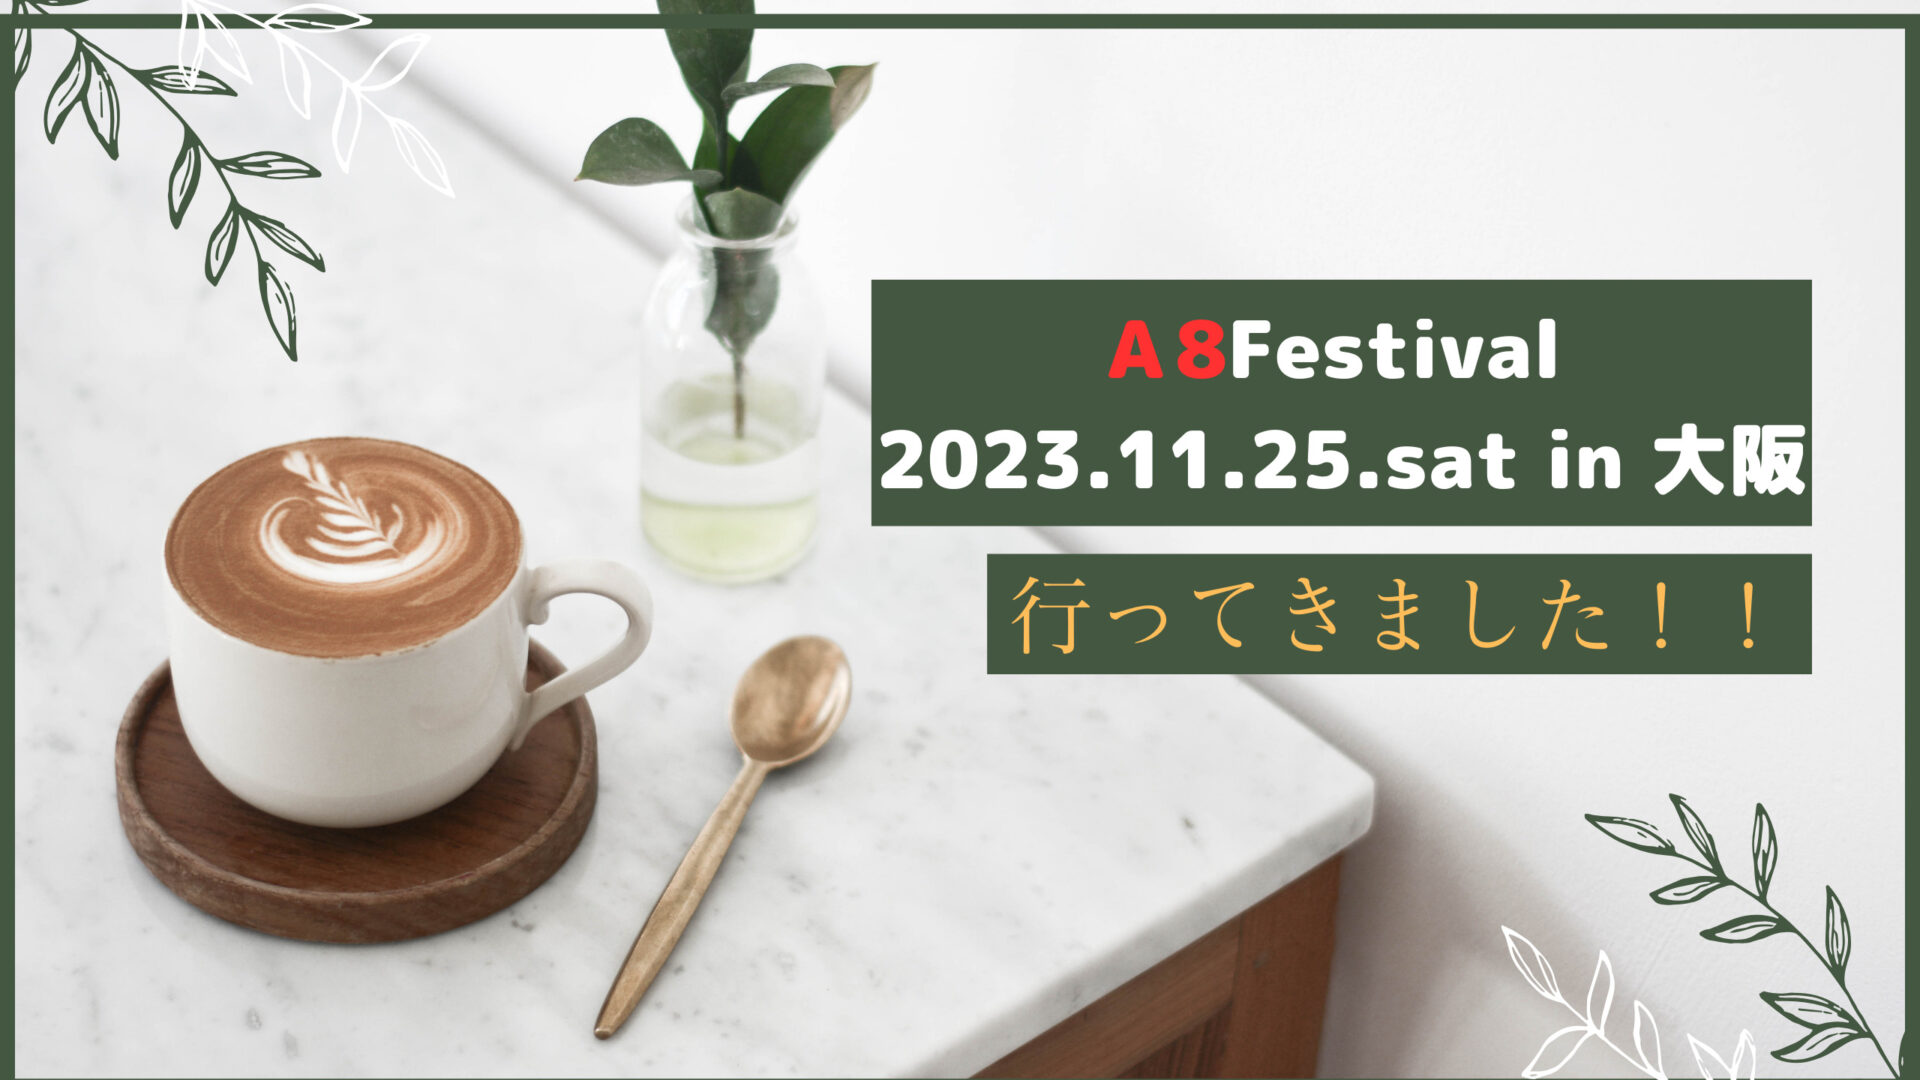 【A8Festival】A8フェスティバル2023in大阪に参加してきました